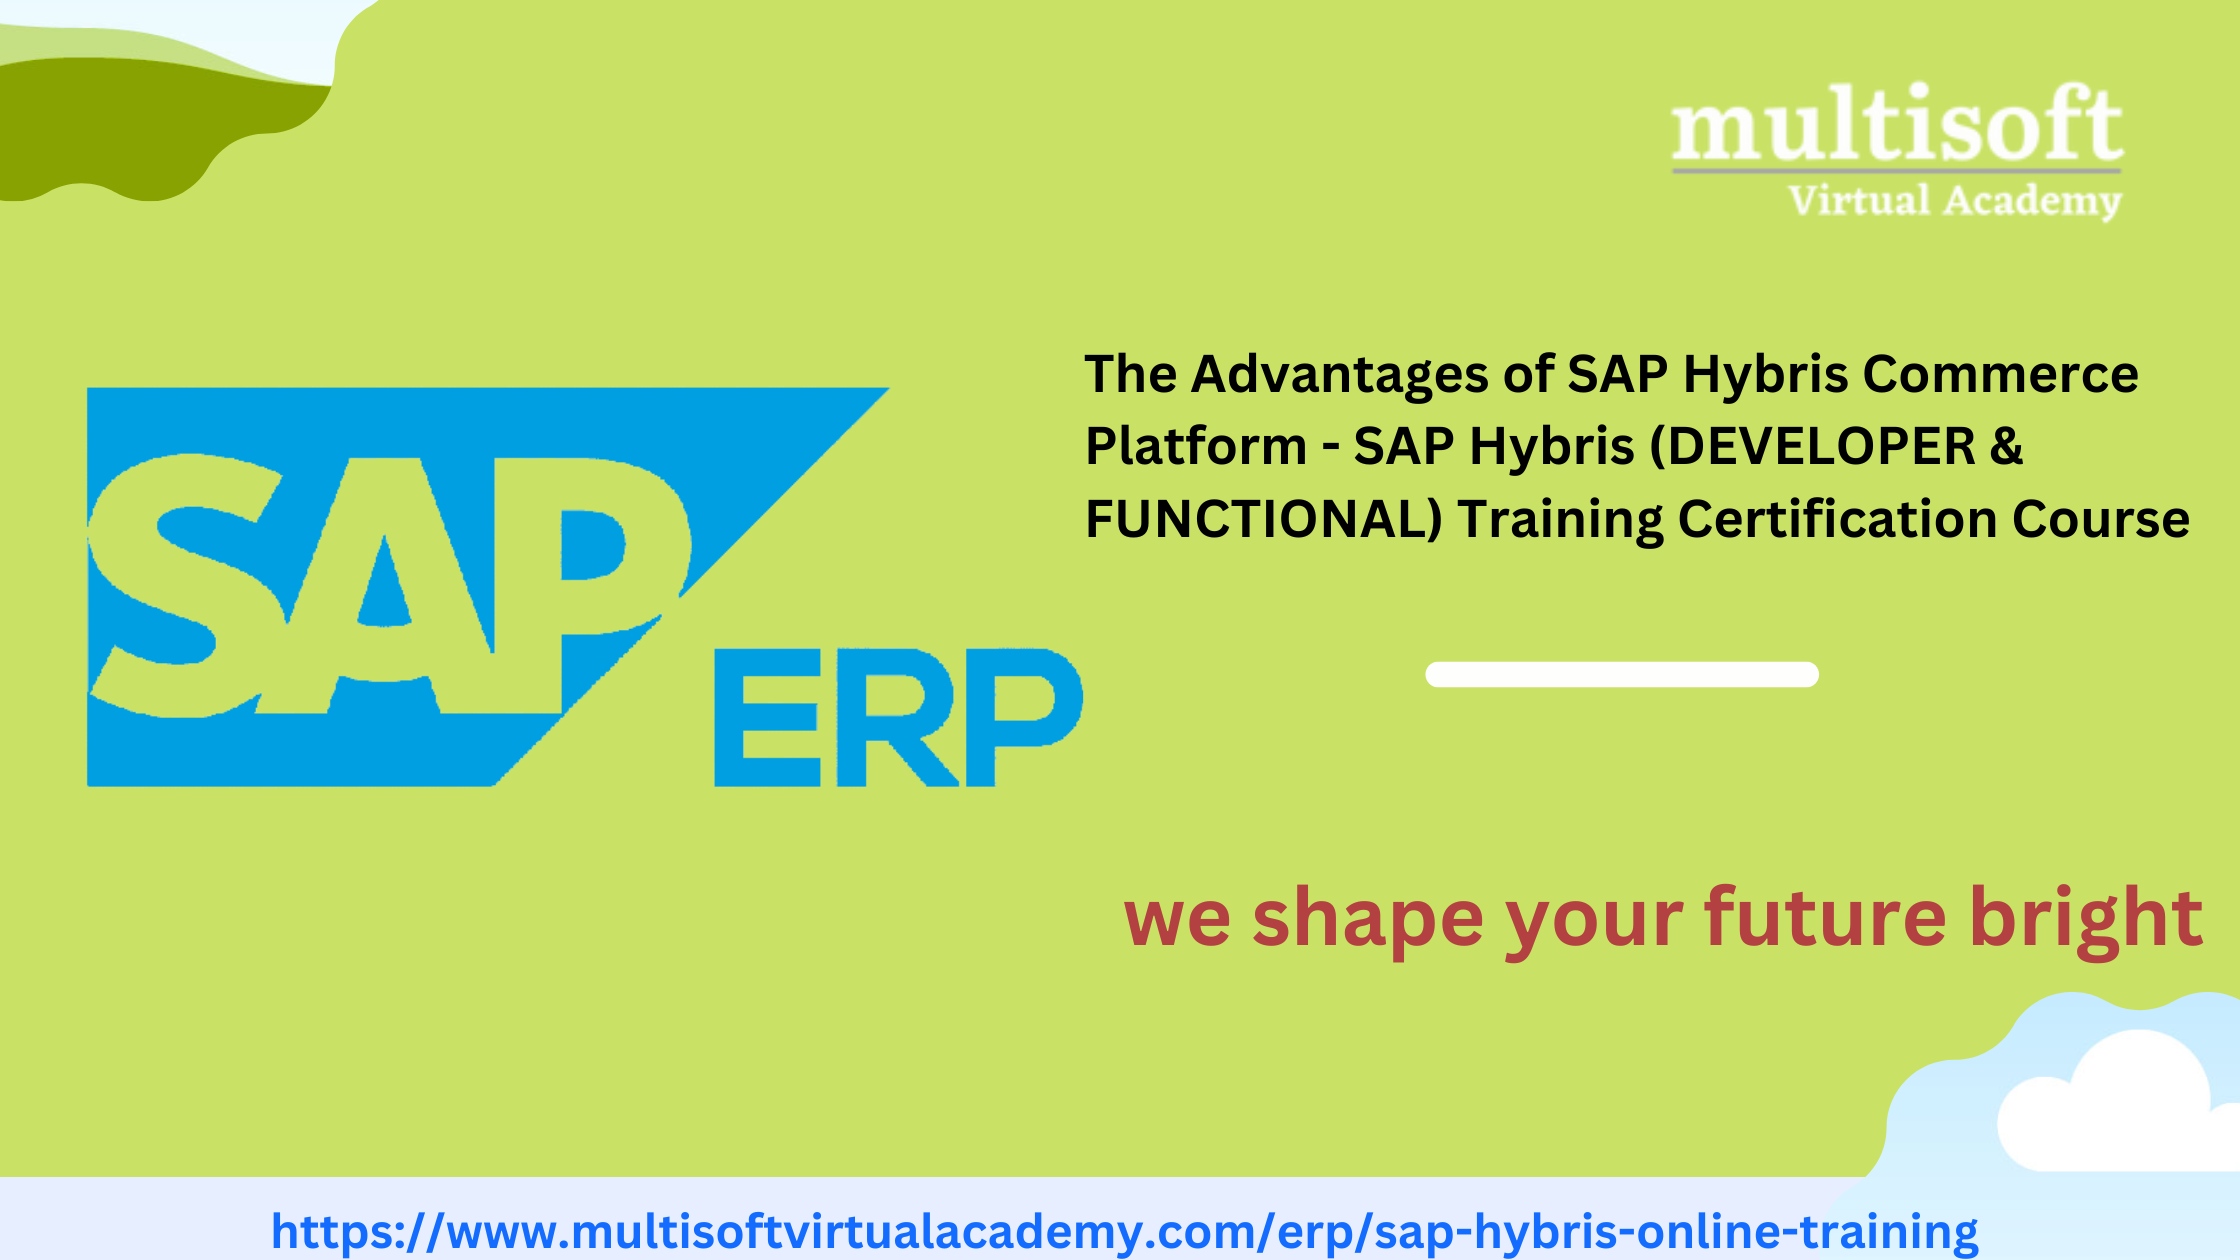 The Advantages of SAP Hybris Commerce Platform - SAP Hybris (DEVELOPER & FUNCTIONAL) Training Certification Course